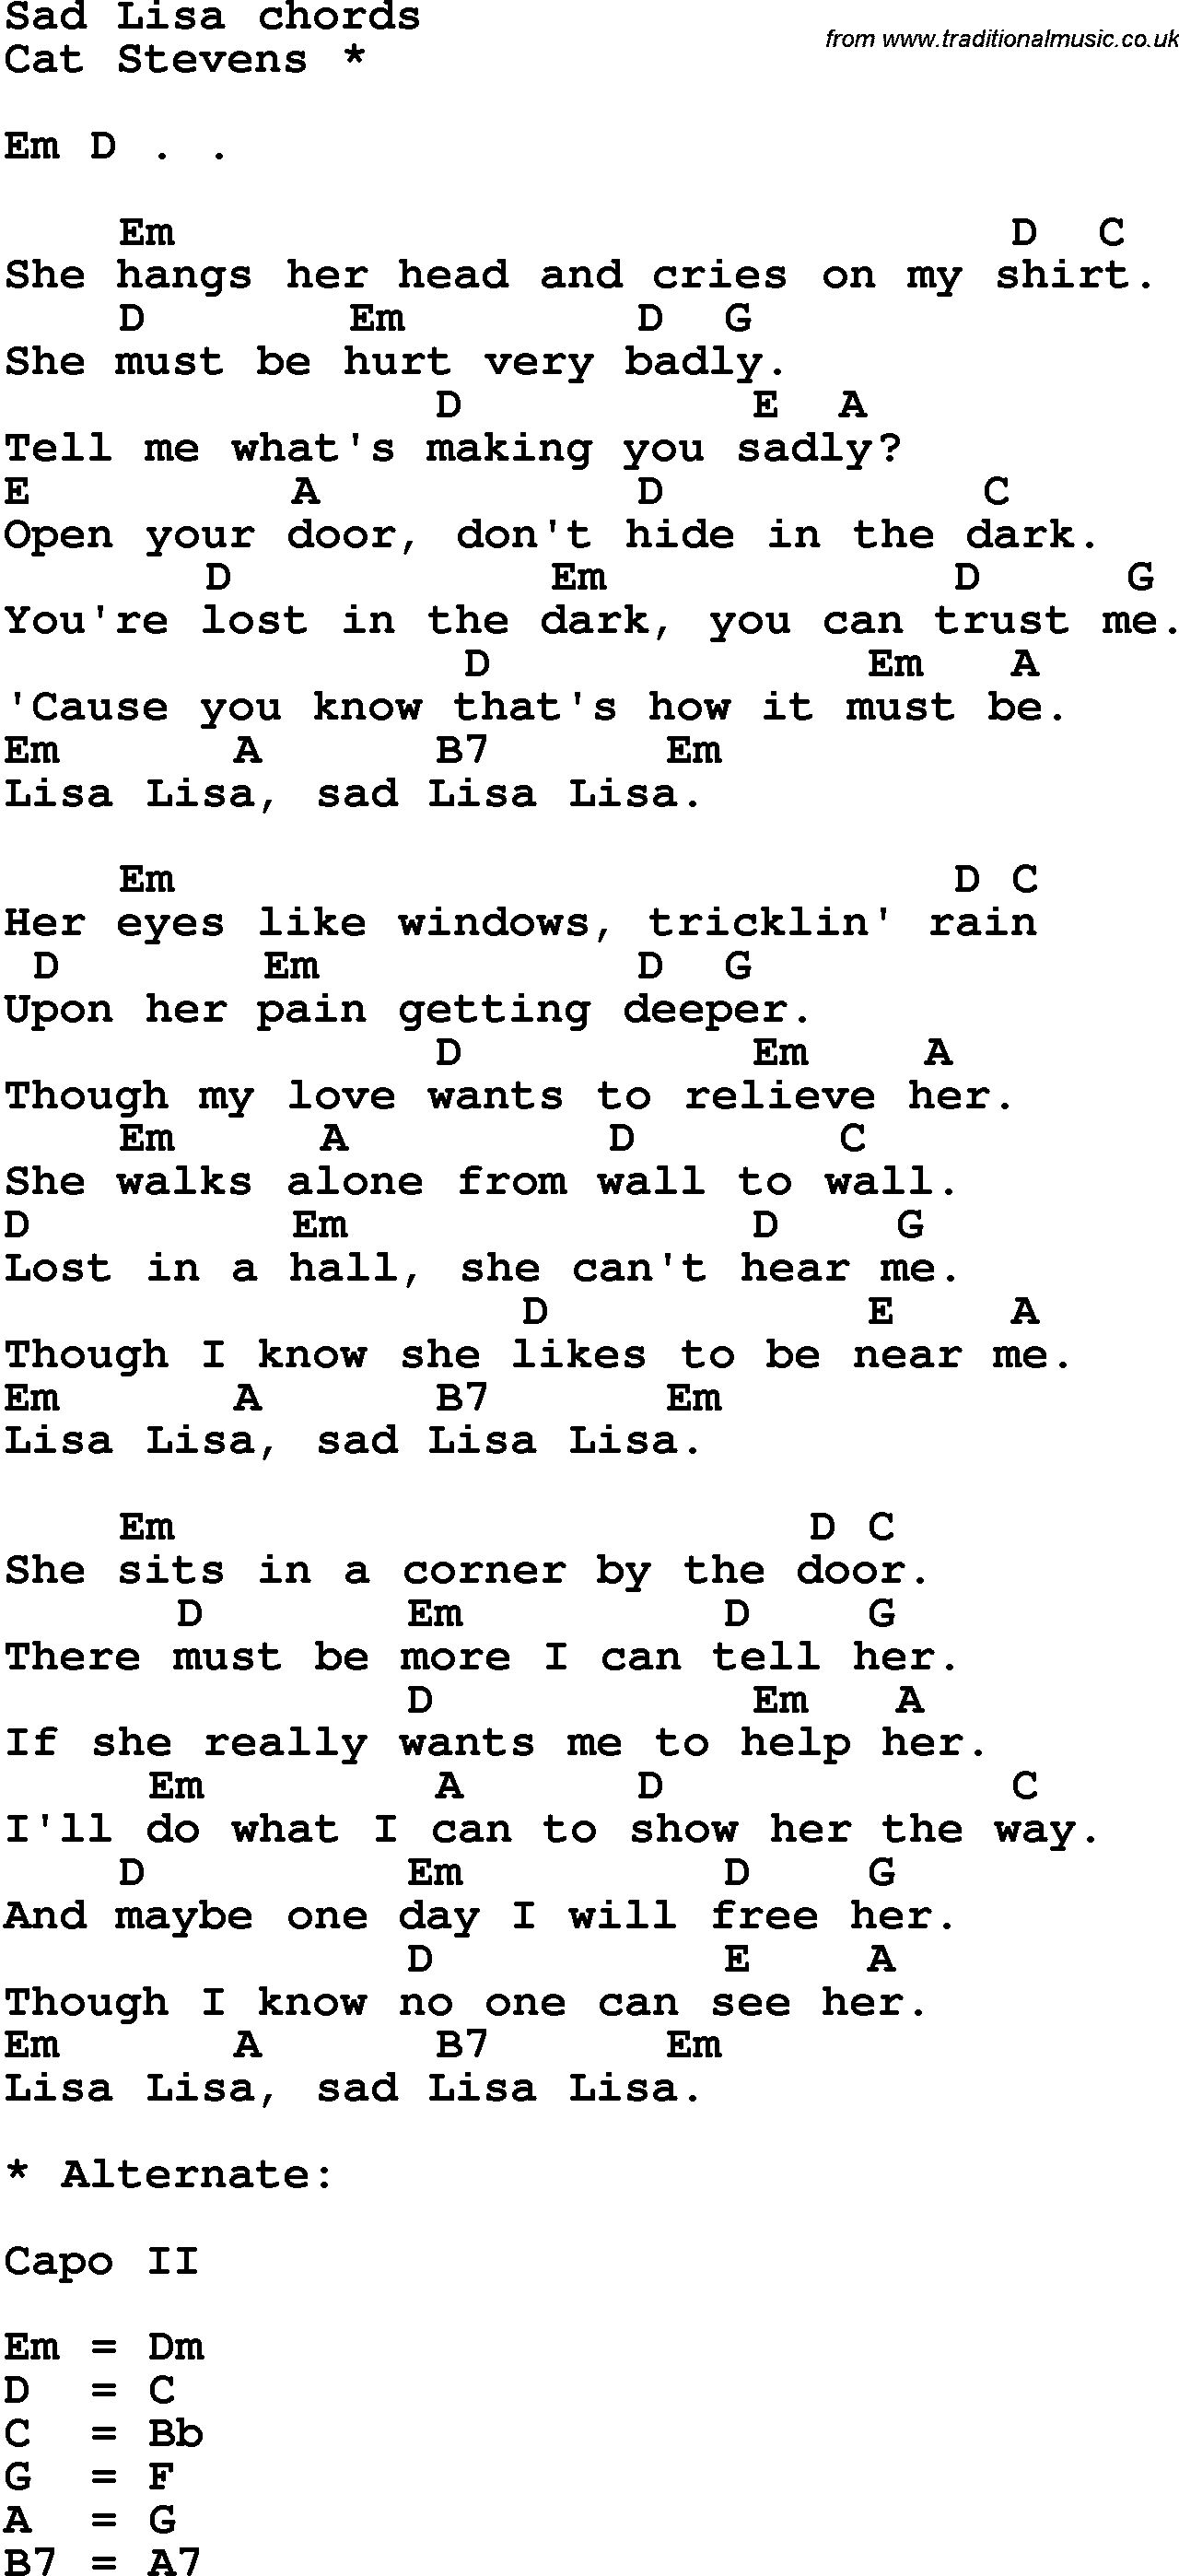 Song Lyrics with guitar chords for Sad Lisa